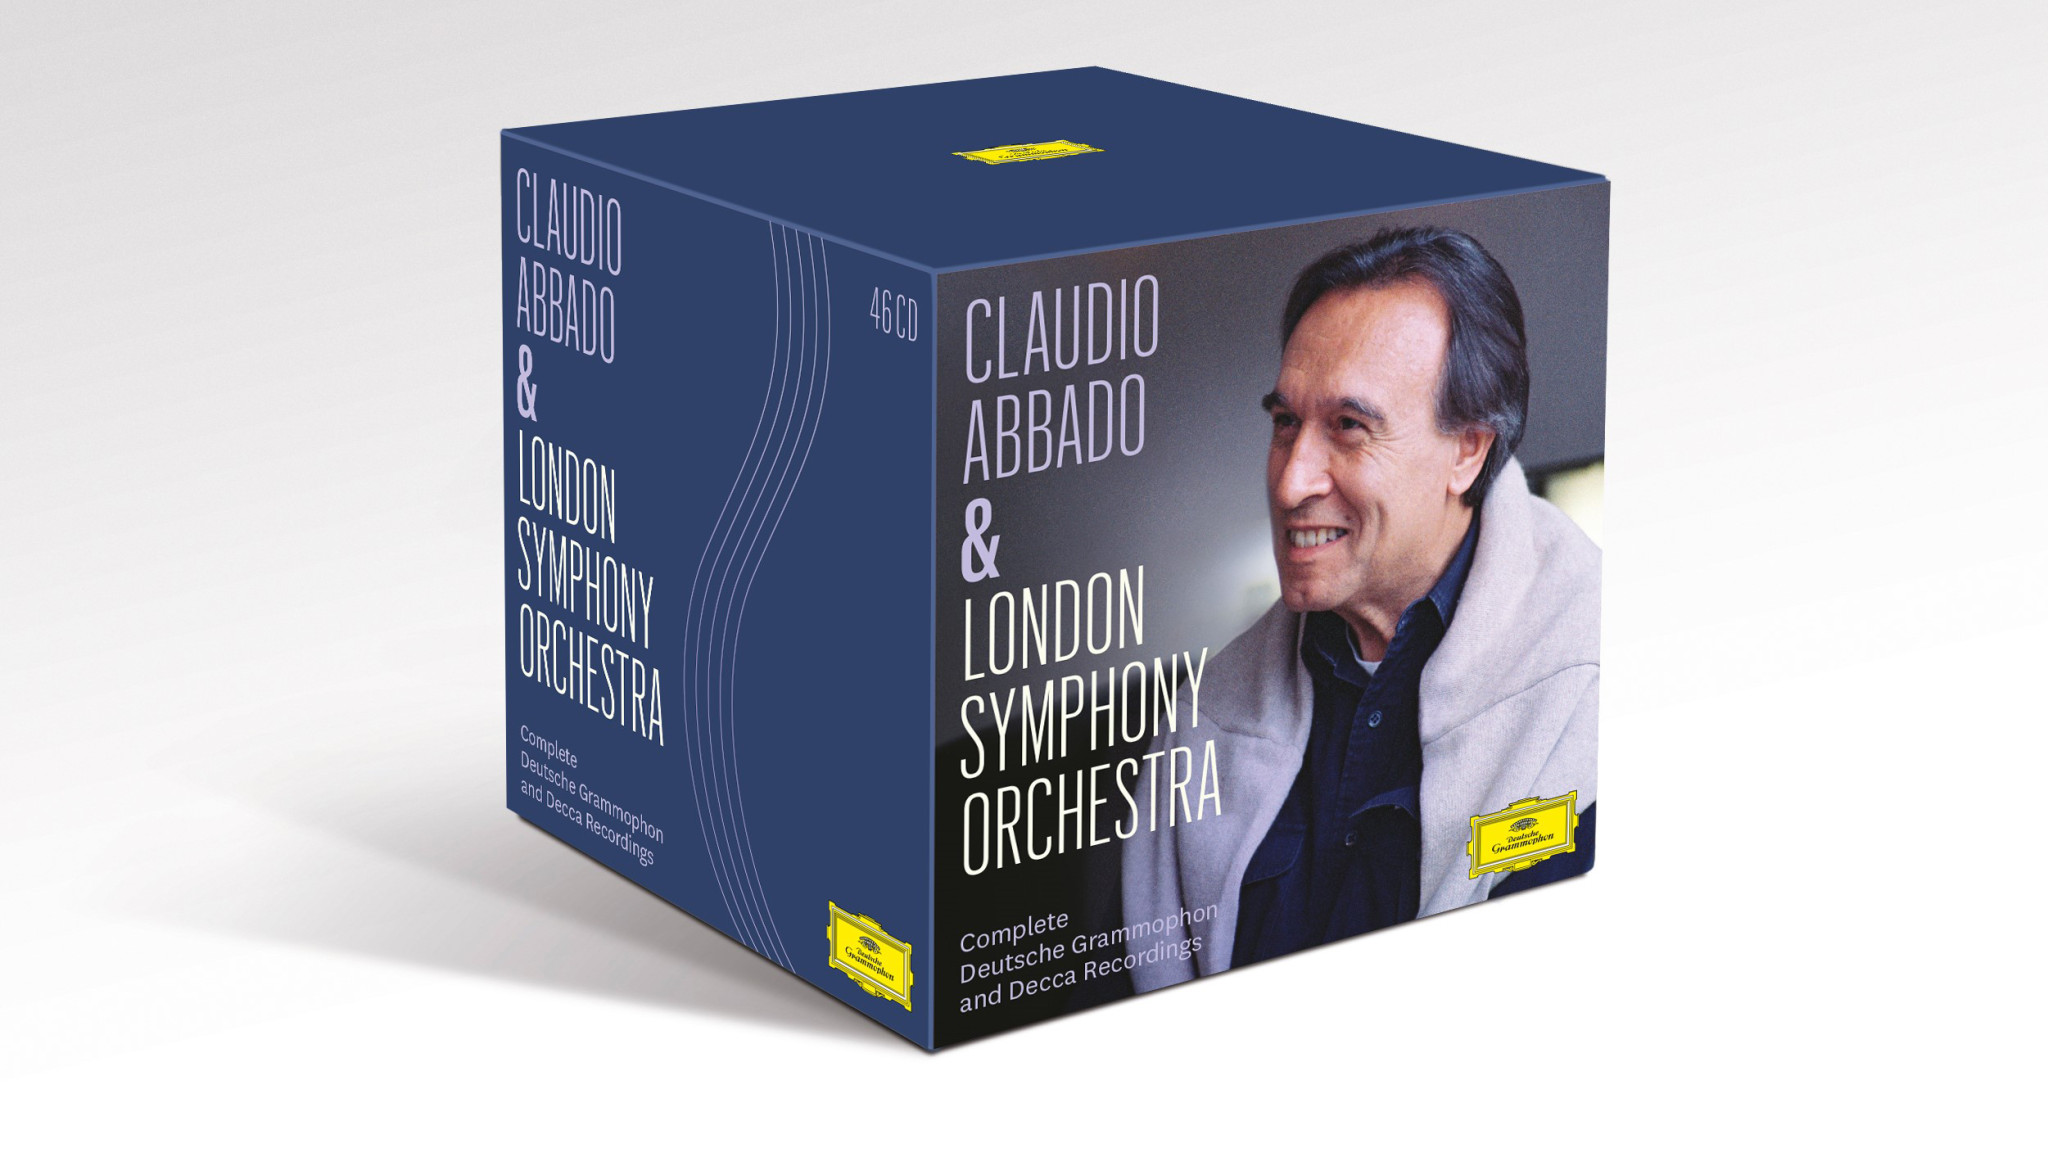 Claudio Abbado & London Symphony Orchestra - Complete Deutsche Grammophon & Decca Recordings